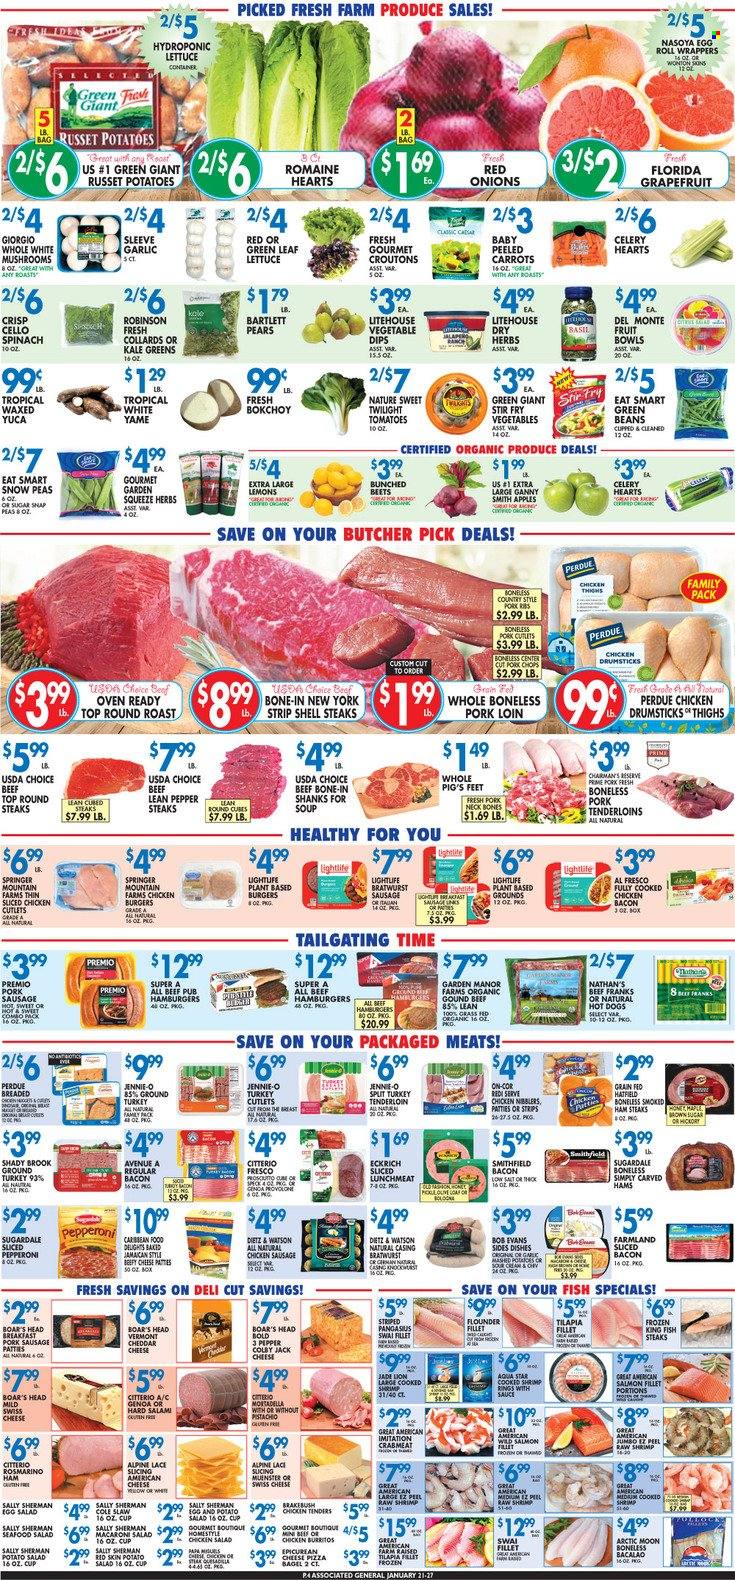 thumbnail - Associated Supermarkets Flyer - 01/21/2022 - 01/27/2022 - Sales products - Bartlett pears, bagels, beans, carrots, celery, garlic, green beans, red onions, russet potatoes, kale, potatoes, peas, sleeved celery, apples, grapefruits, pears, crab meat, flounder, salmon, salmon fillet, tilapia, pangasius, seafood, fish, king fish, shrimps, fish steak, swai fillet, hot dog, pizza, soup, hamburger, sauce, egg rolls, burrito, Perdue®, Bob Evans, Sugardale, bacon, mortadella, salami, ham, smoked ham, Dietz & Watson, bratwurst, pork sausage, pepperoni, chicken sausage, potato salad, macaroni salad, seafood salad, lunch meat, ham steaks, american cheese, swiss cheese, Provolone, eggs, snap peas, snow peas, strips, croutons, esponja, pepper, ground turkey, chicken cutlets, chicken drumsticks, turkey tenderloin, beef meat, steak, round roast, sirloin steak, pork chops, pork loin, pork meat, pork tenderloin, beef bone, lemons. Page 4.